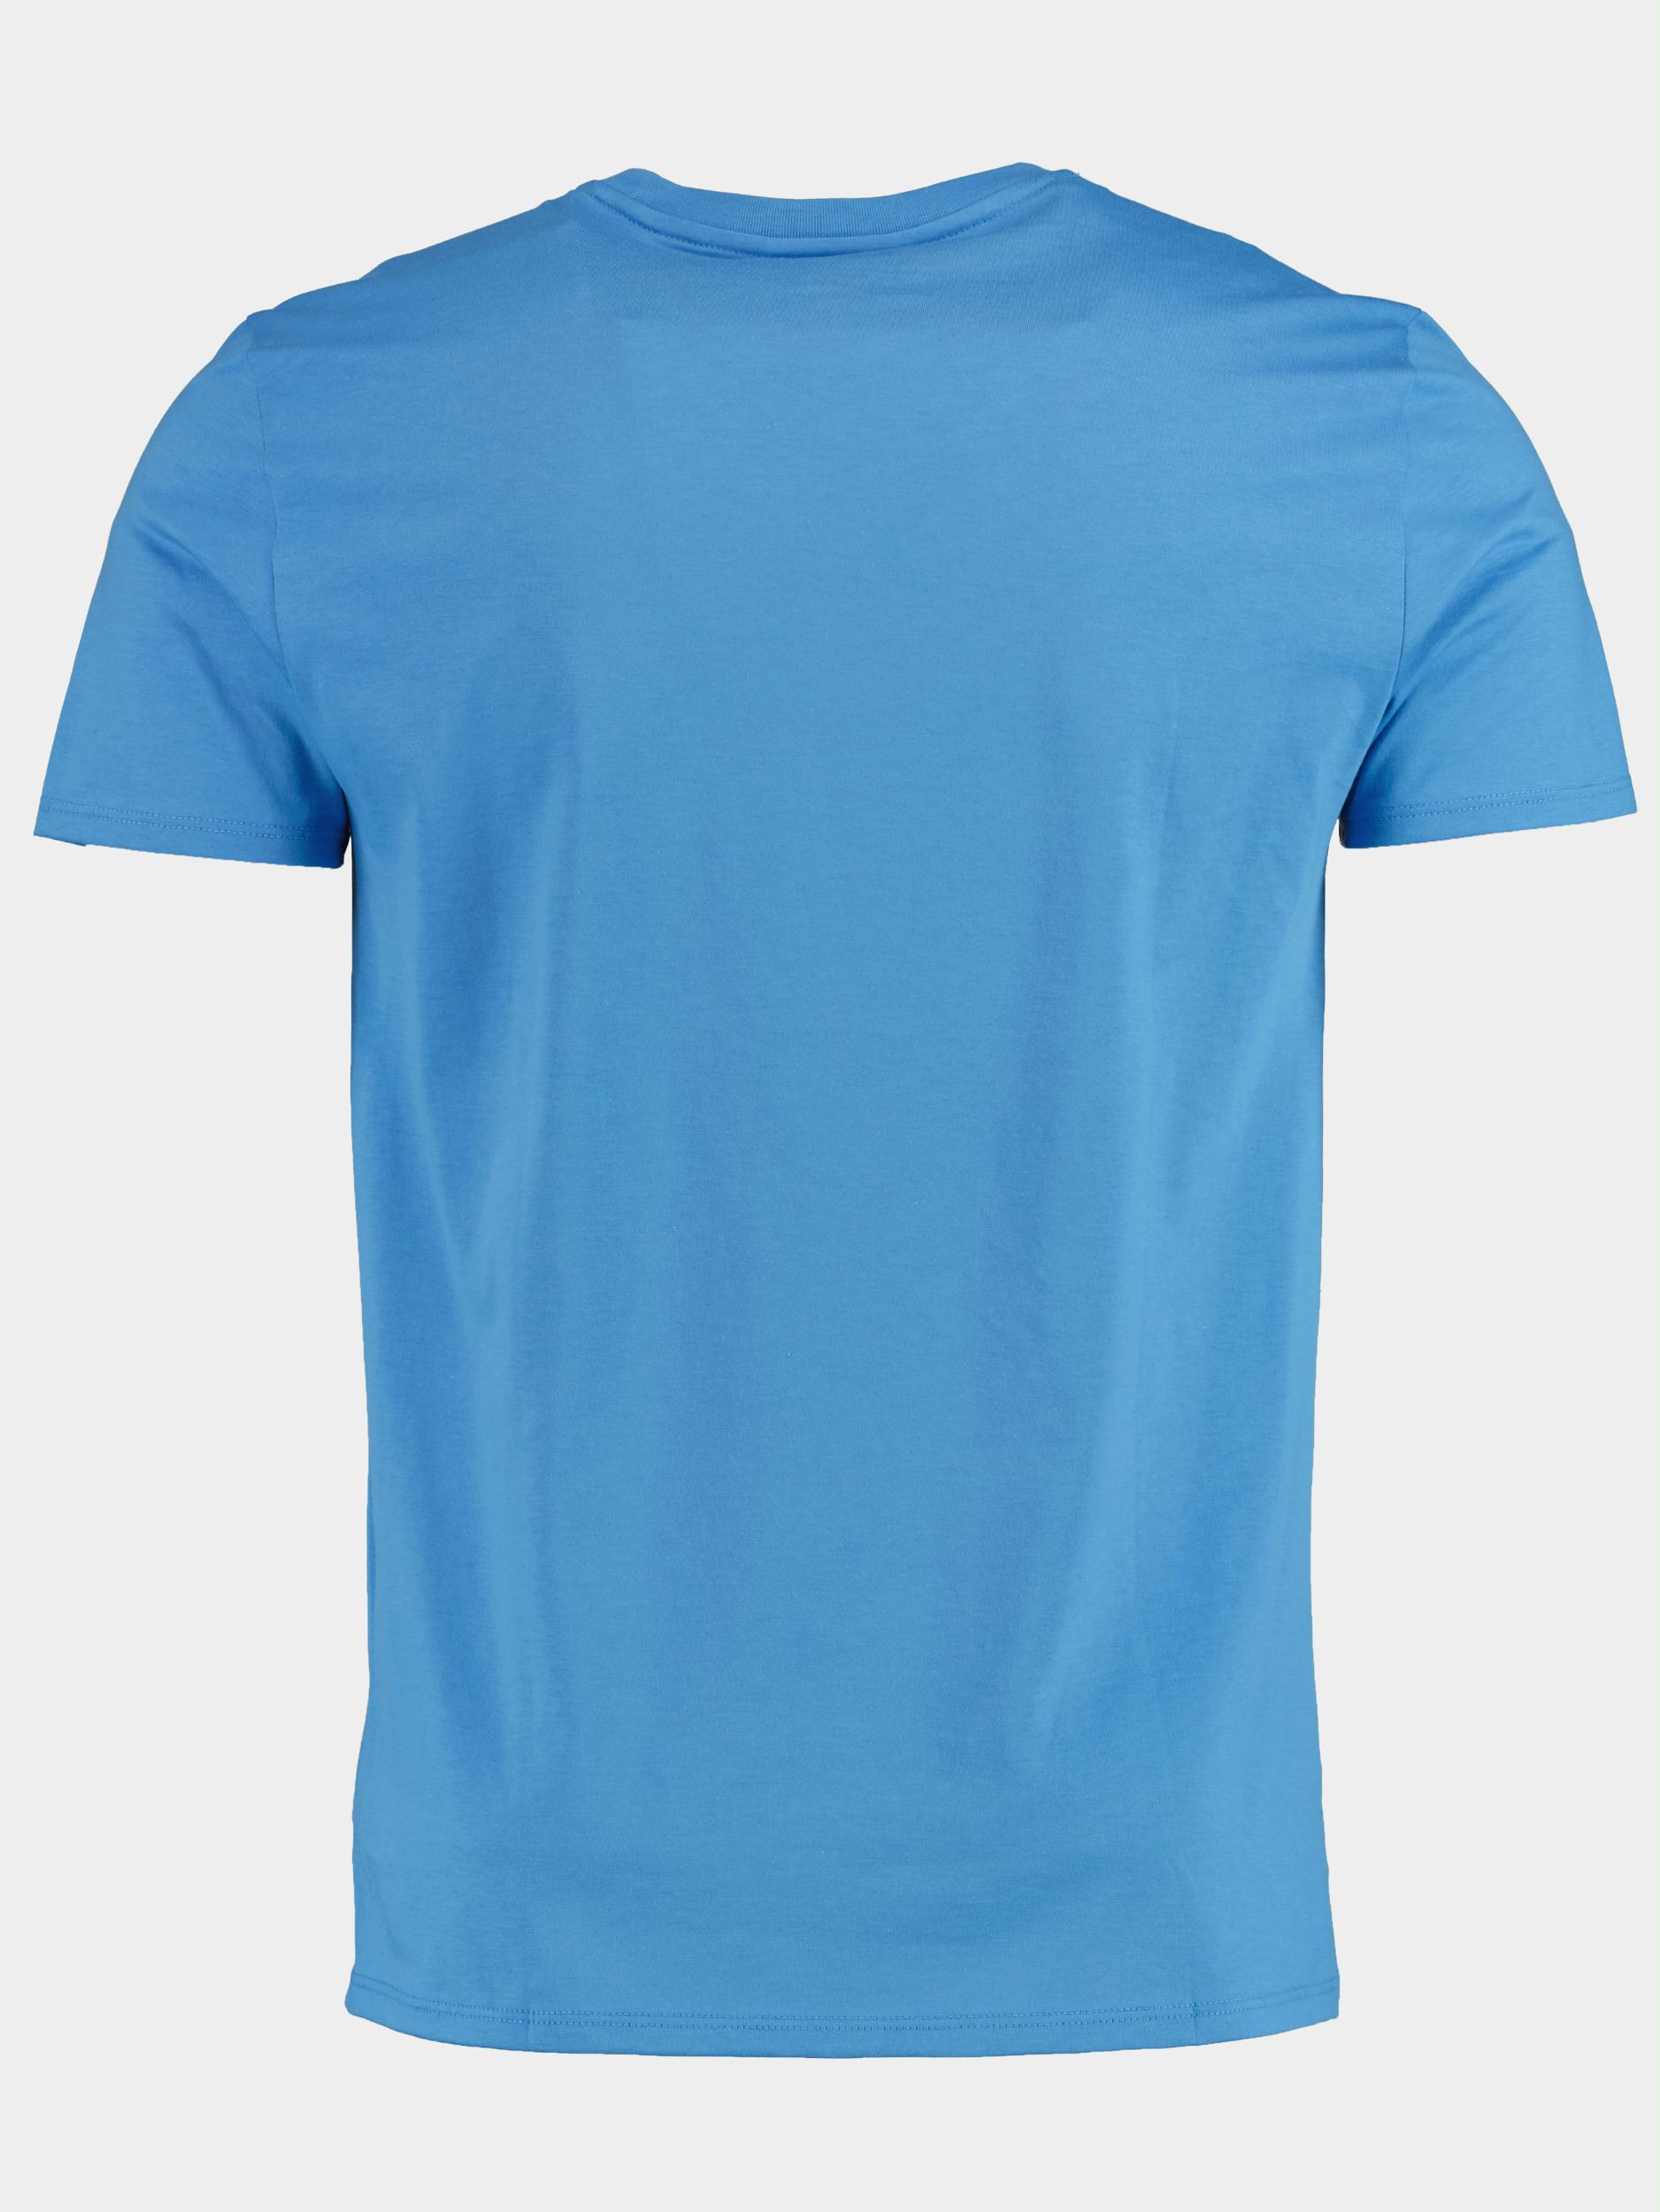 Lacoste T-shirt korte mouw Blauw  TH6709/L99